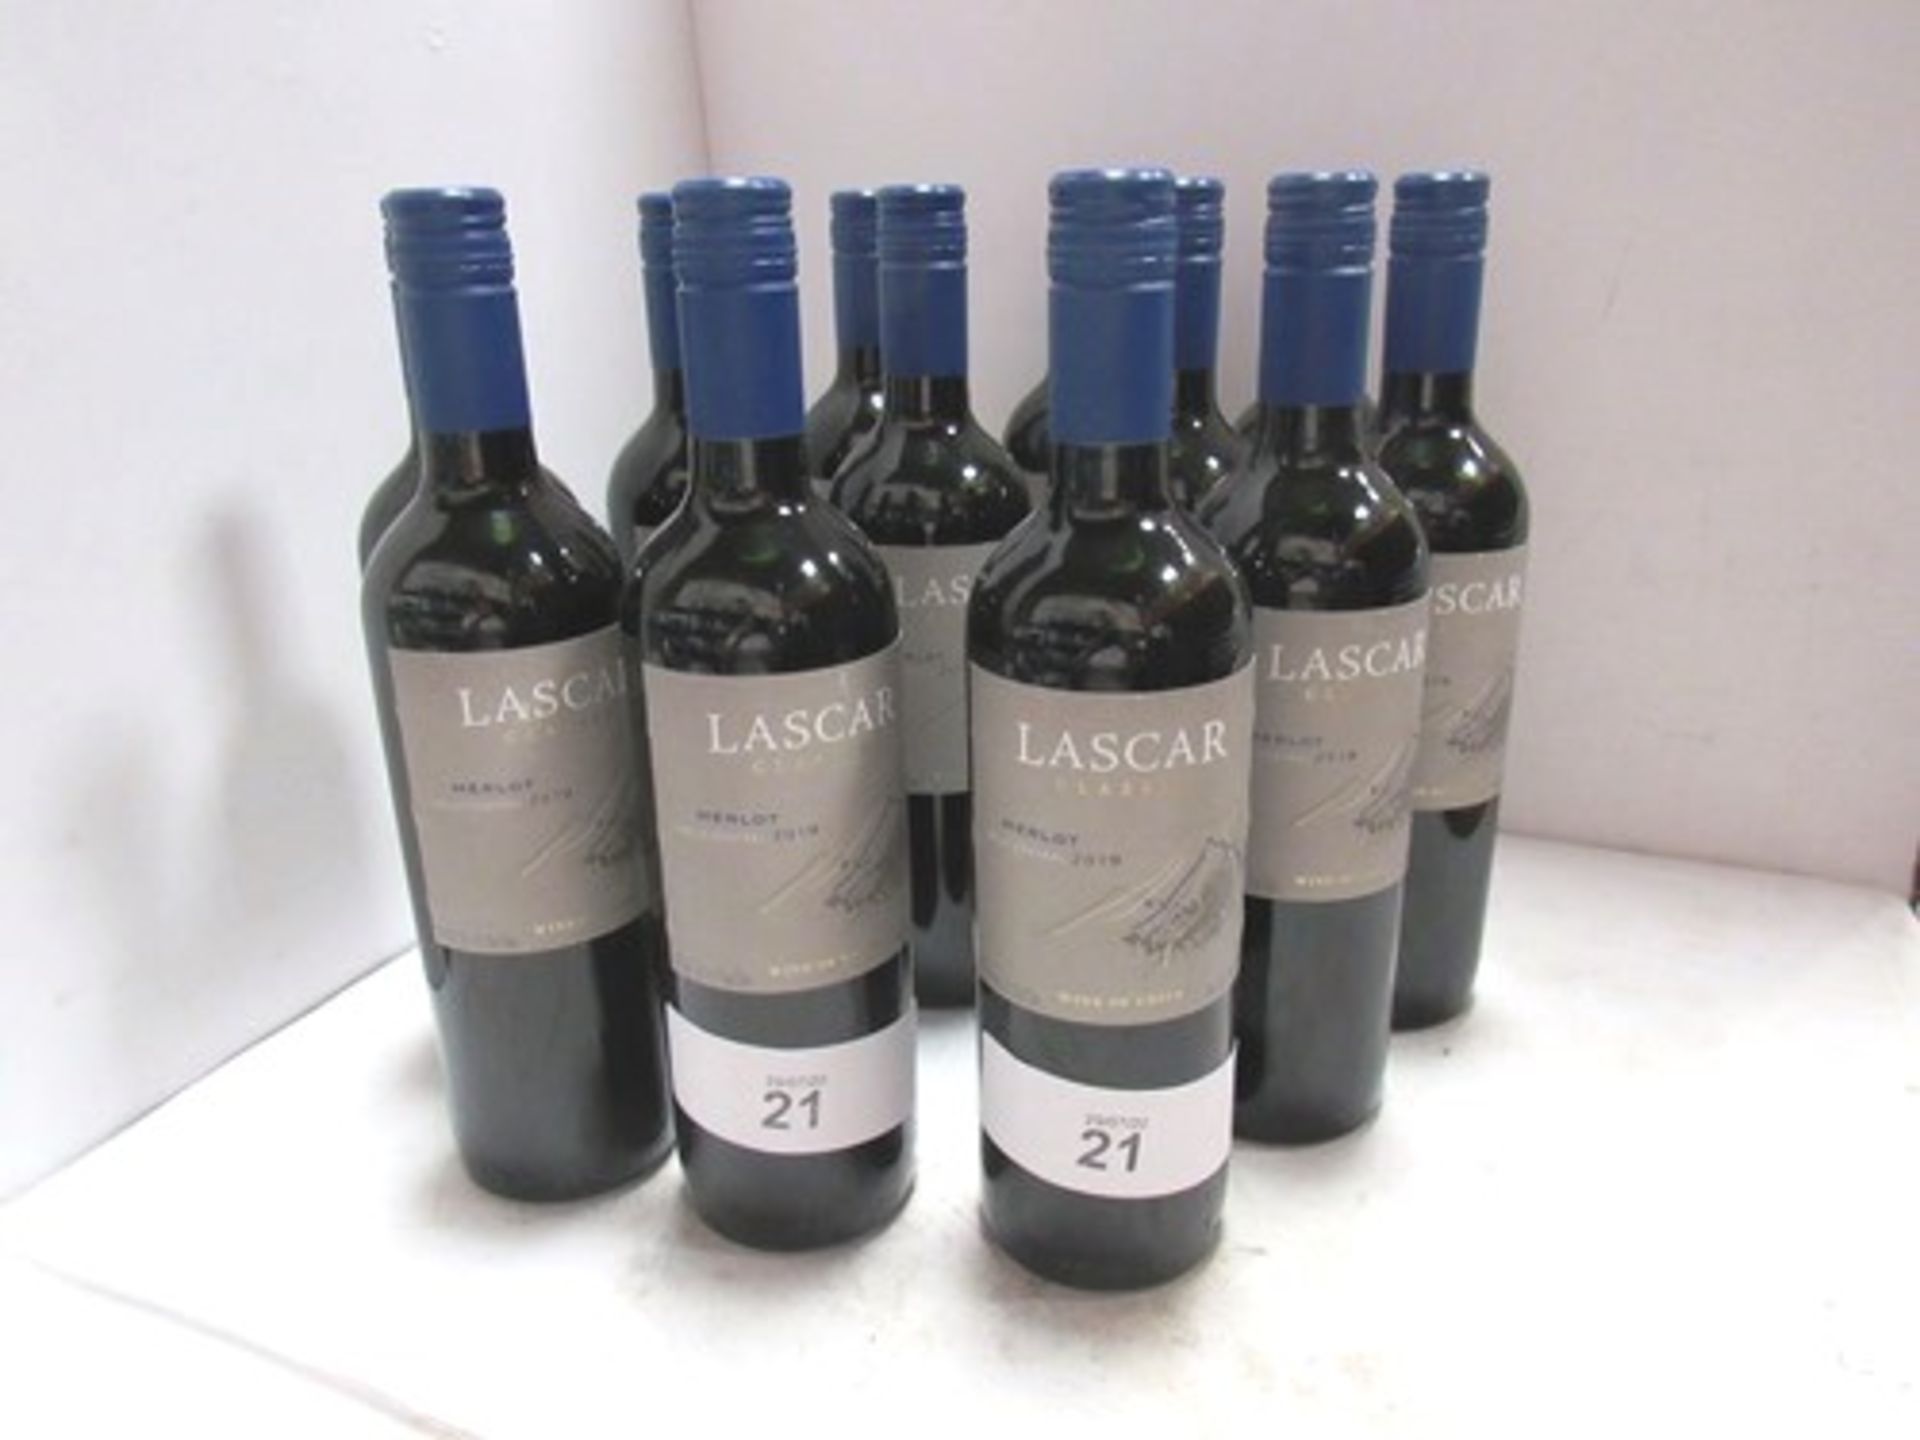 12 x bottles of Lascar Classic Merlot 2019 (12) (GS11)